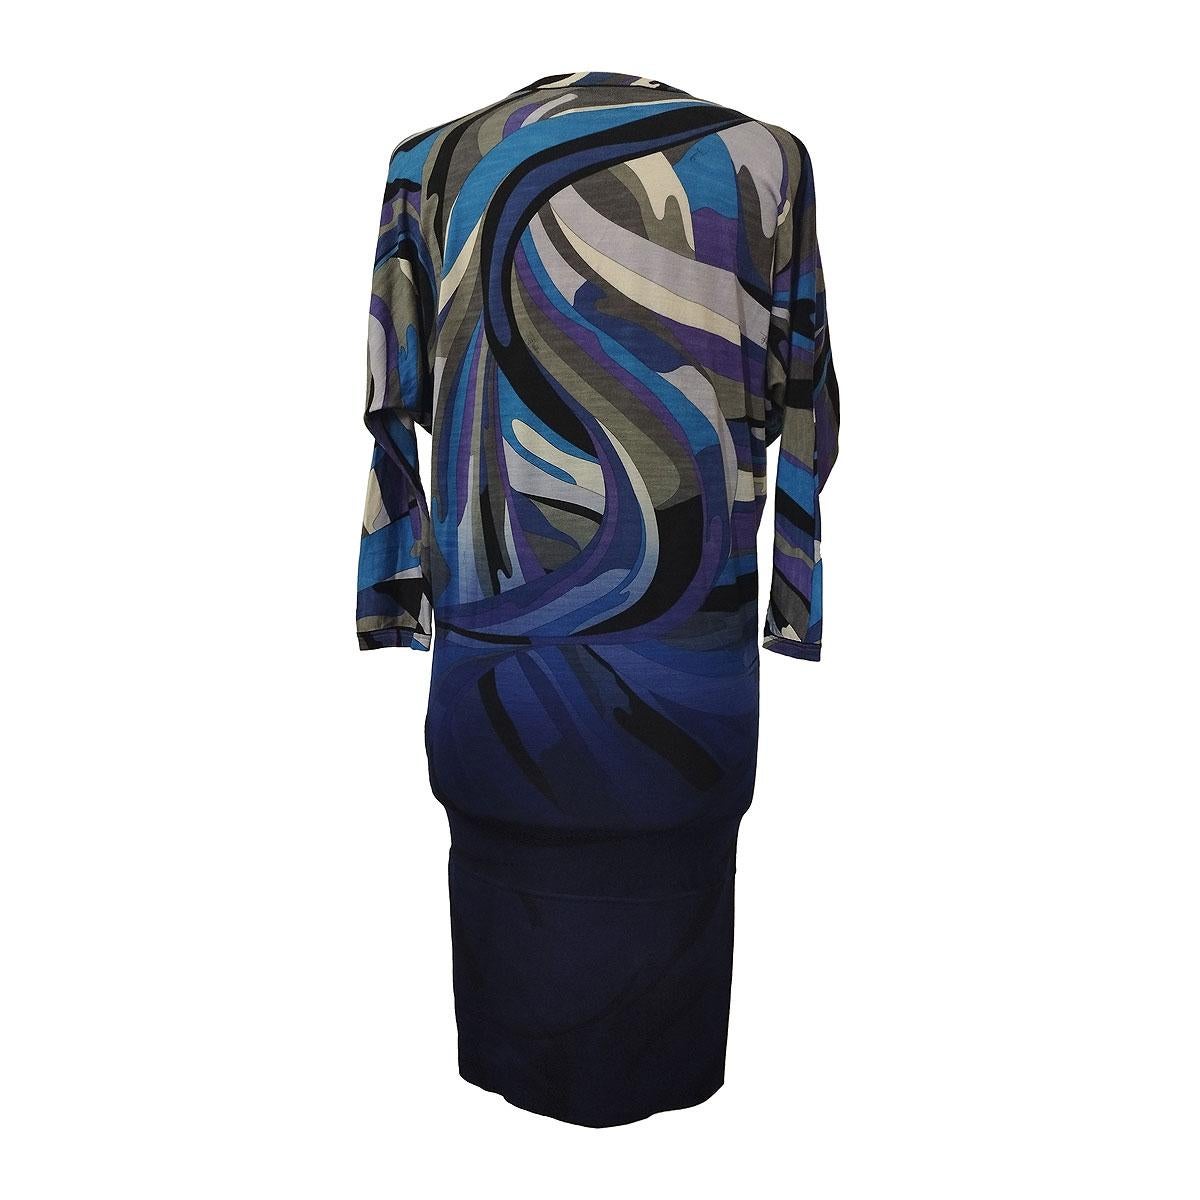 Fancy dress
100% Wool
Fancy pattern
Blue color
3/4 Sleeve
Maximum length cm 92 (36,22 inches)
